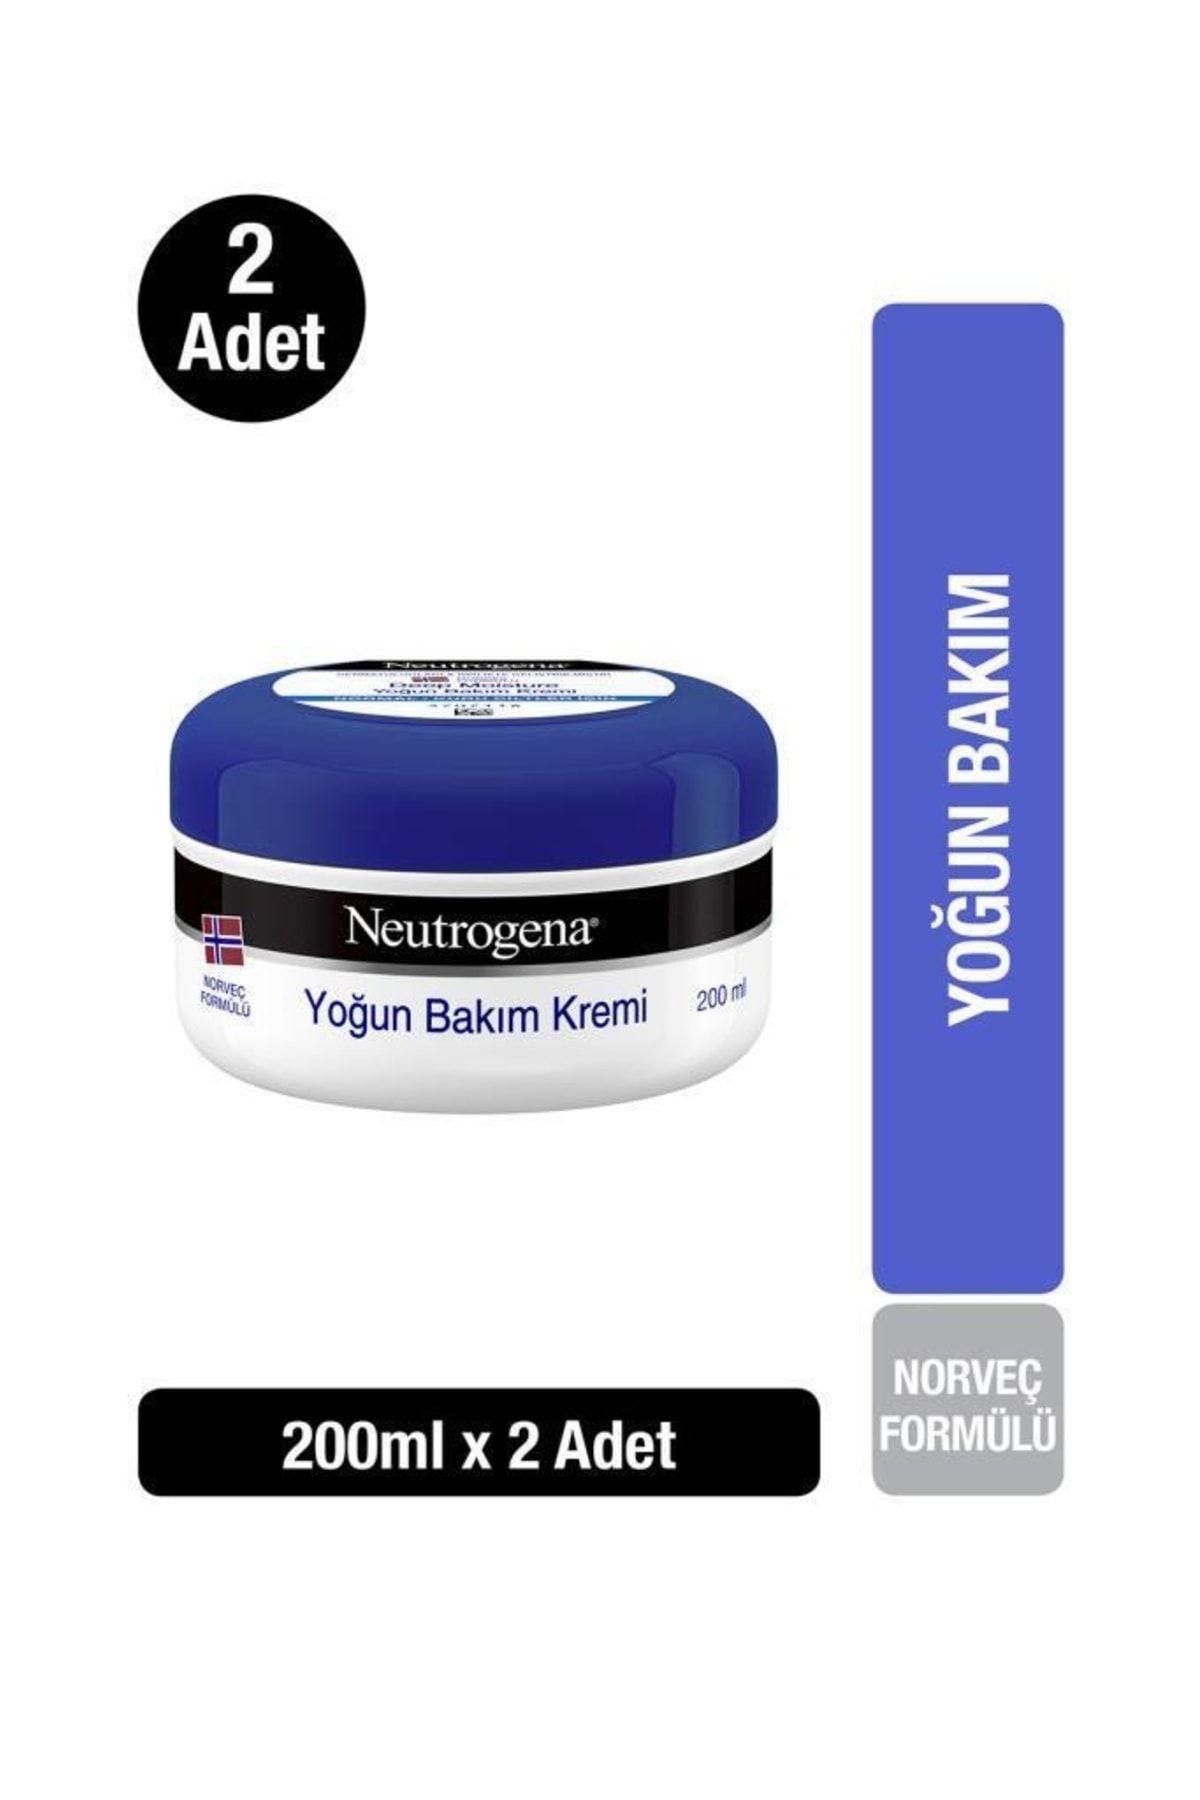 Neutrogena Norveç Formülü Comfort Balm Yoğun Bakım Kremi 200 ml X 2 Adet